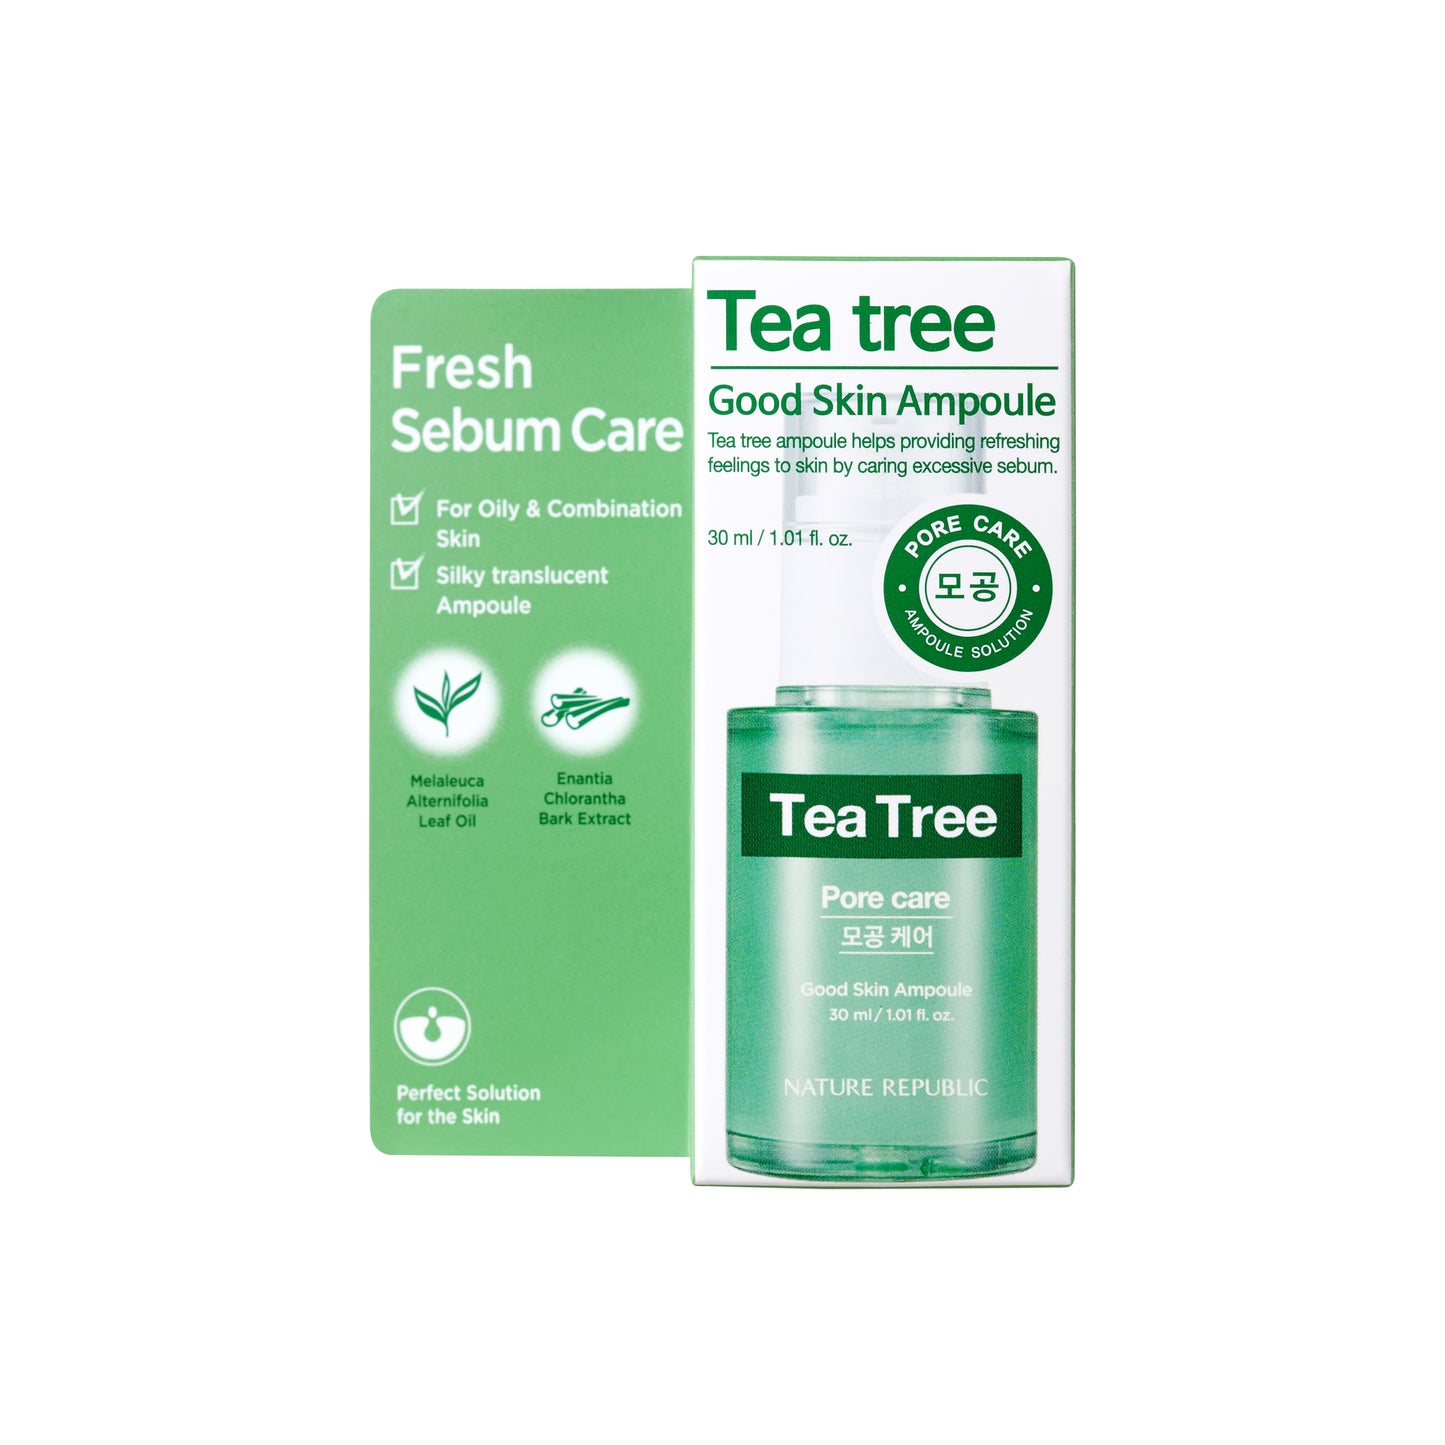 PORE CARE] Good Skin Tea Tree Ampoule Toner Pad – Nature Republic USA